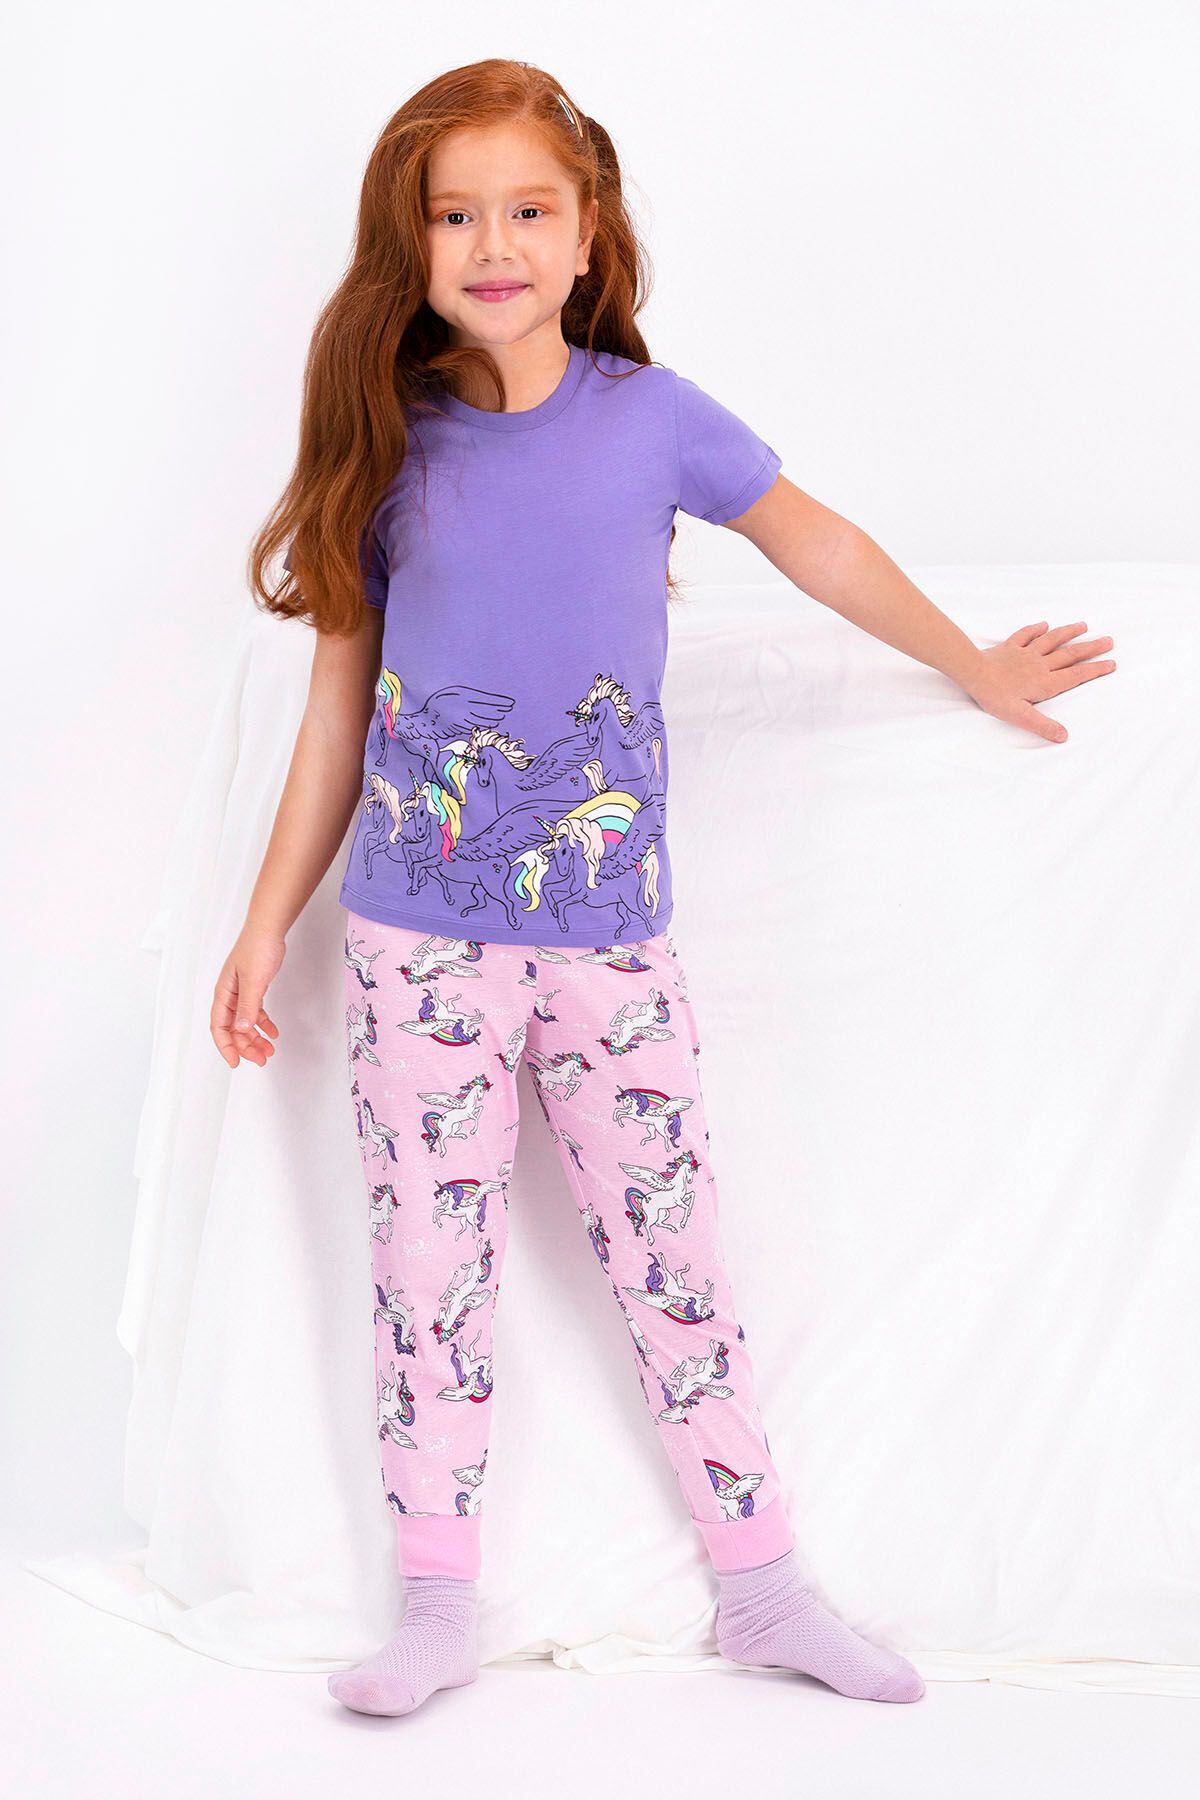 Rolypoly Rolypoly Unicorn Mor Kız Çocuk Kısa Kol Pijama Takımı